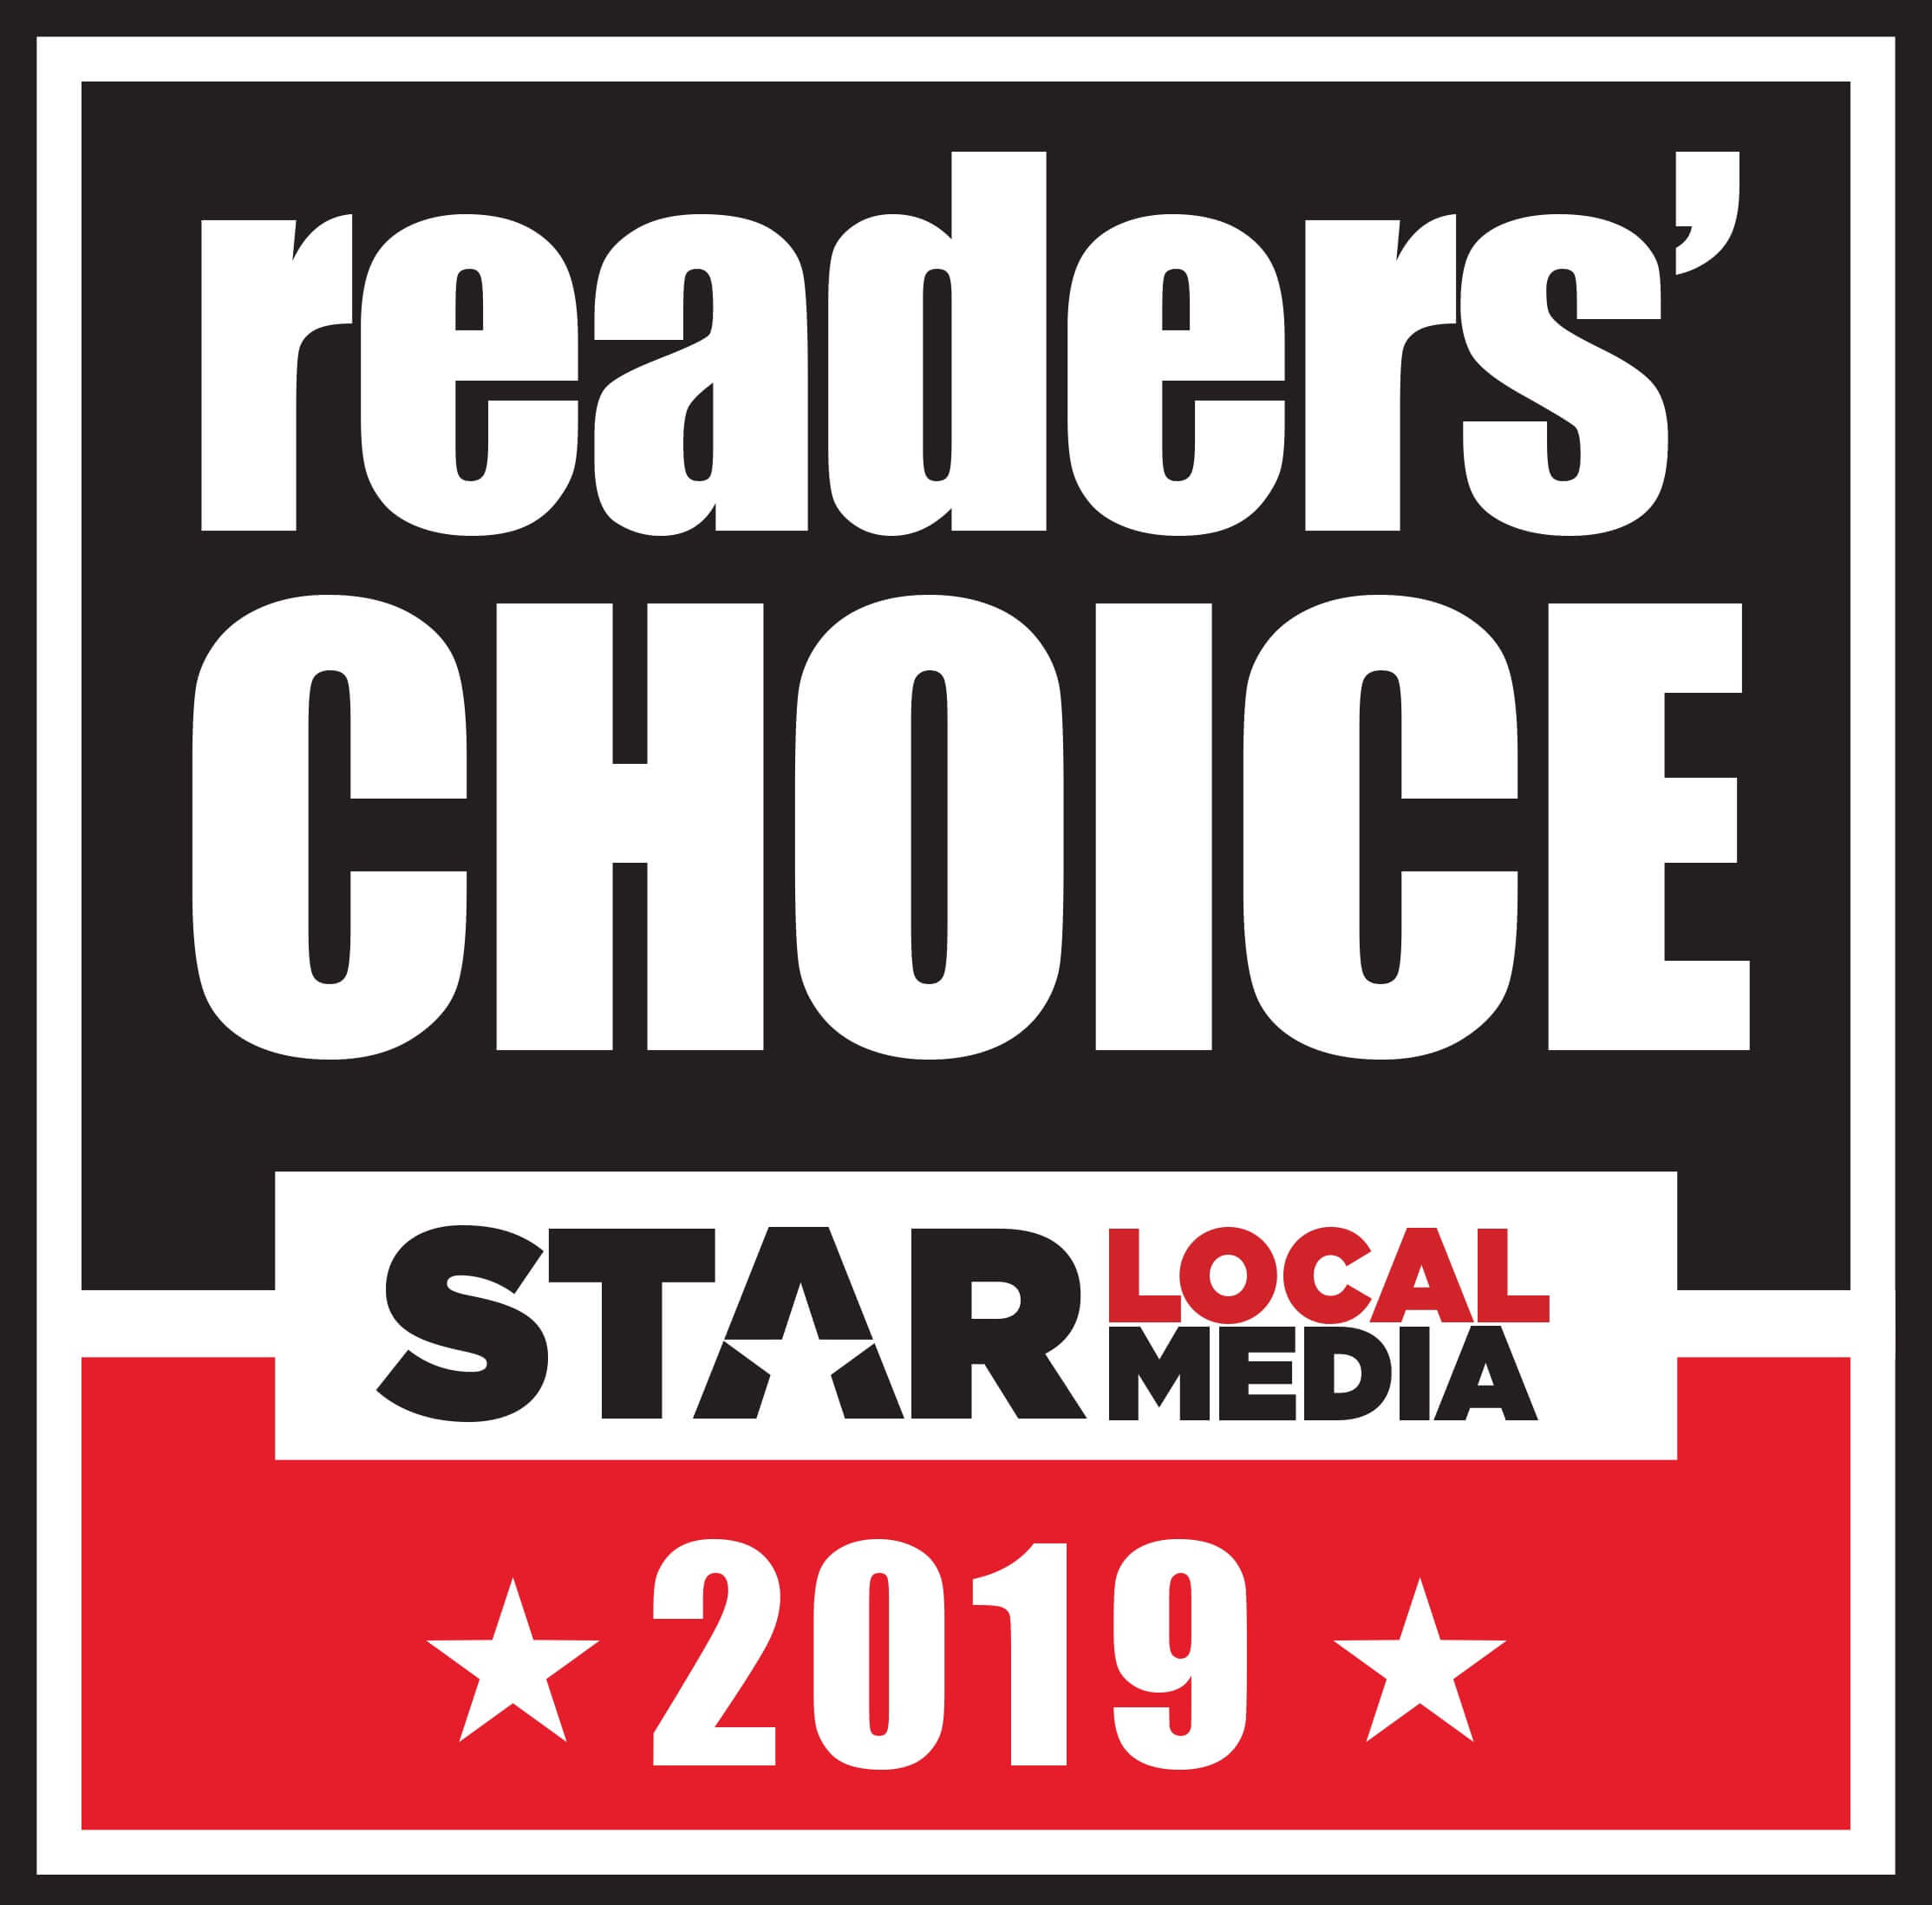 Readers' Choice Award 2019